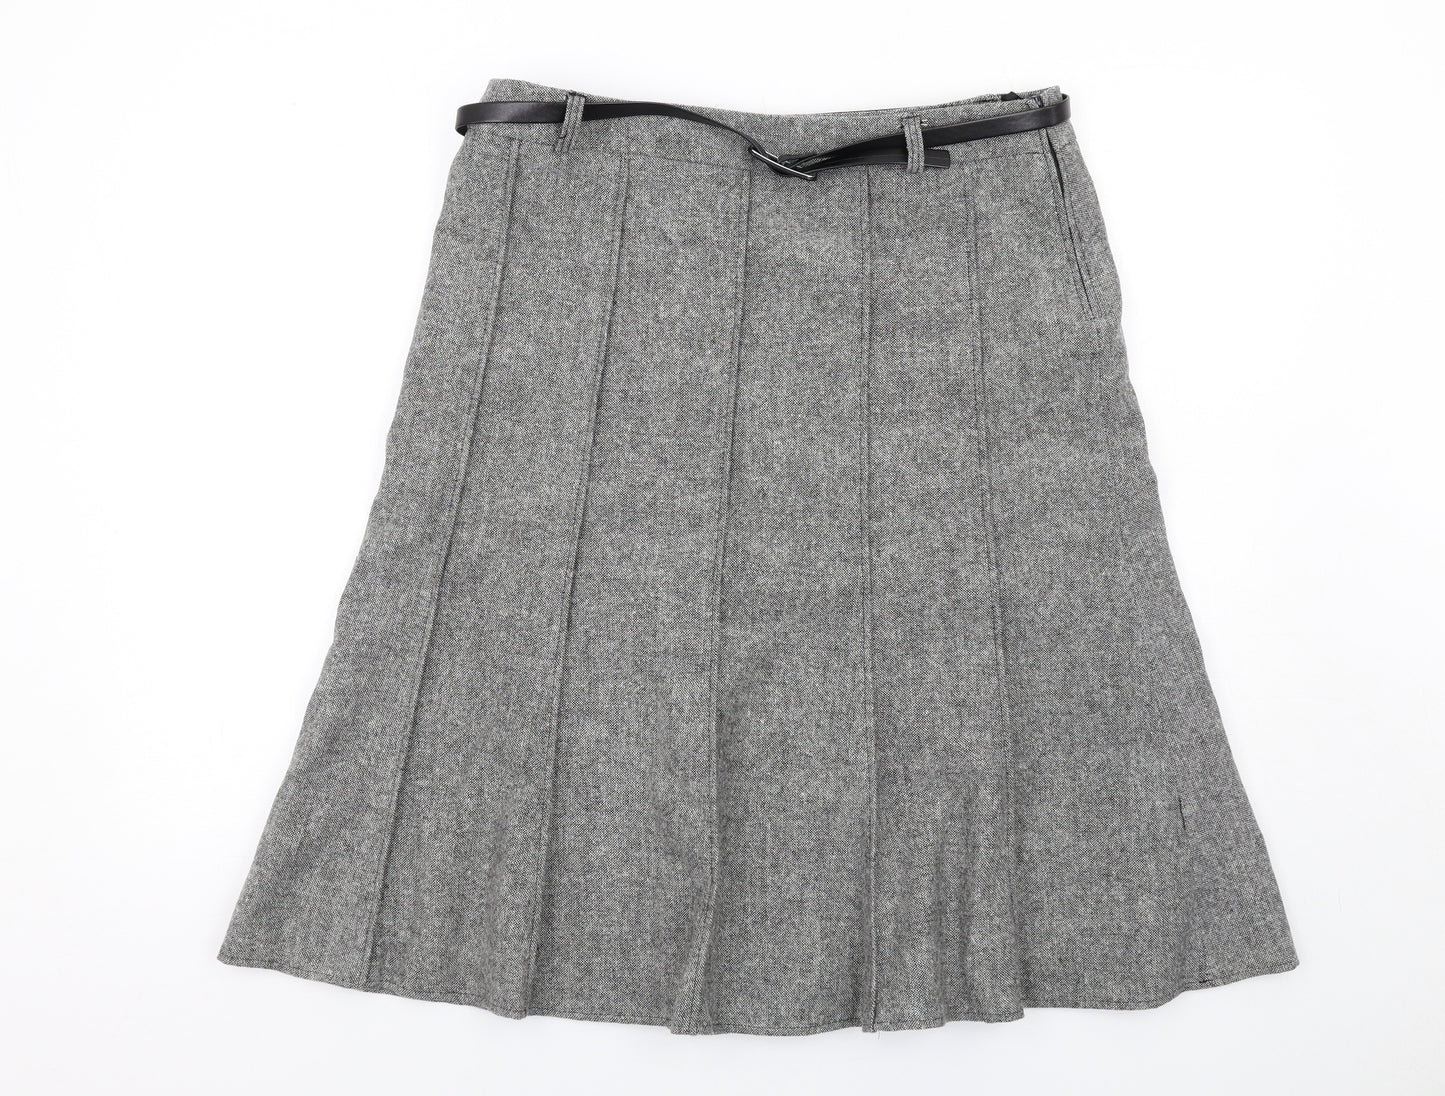 Lakeland Womens Grey Polyester Swing Skirt Size 16 Zip - Belt included